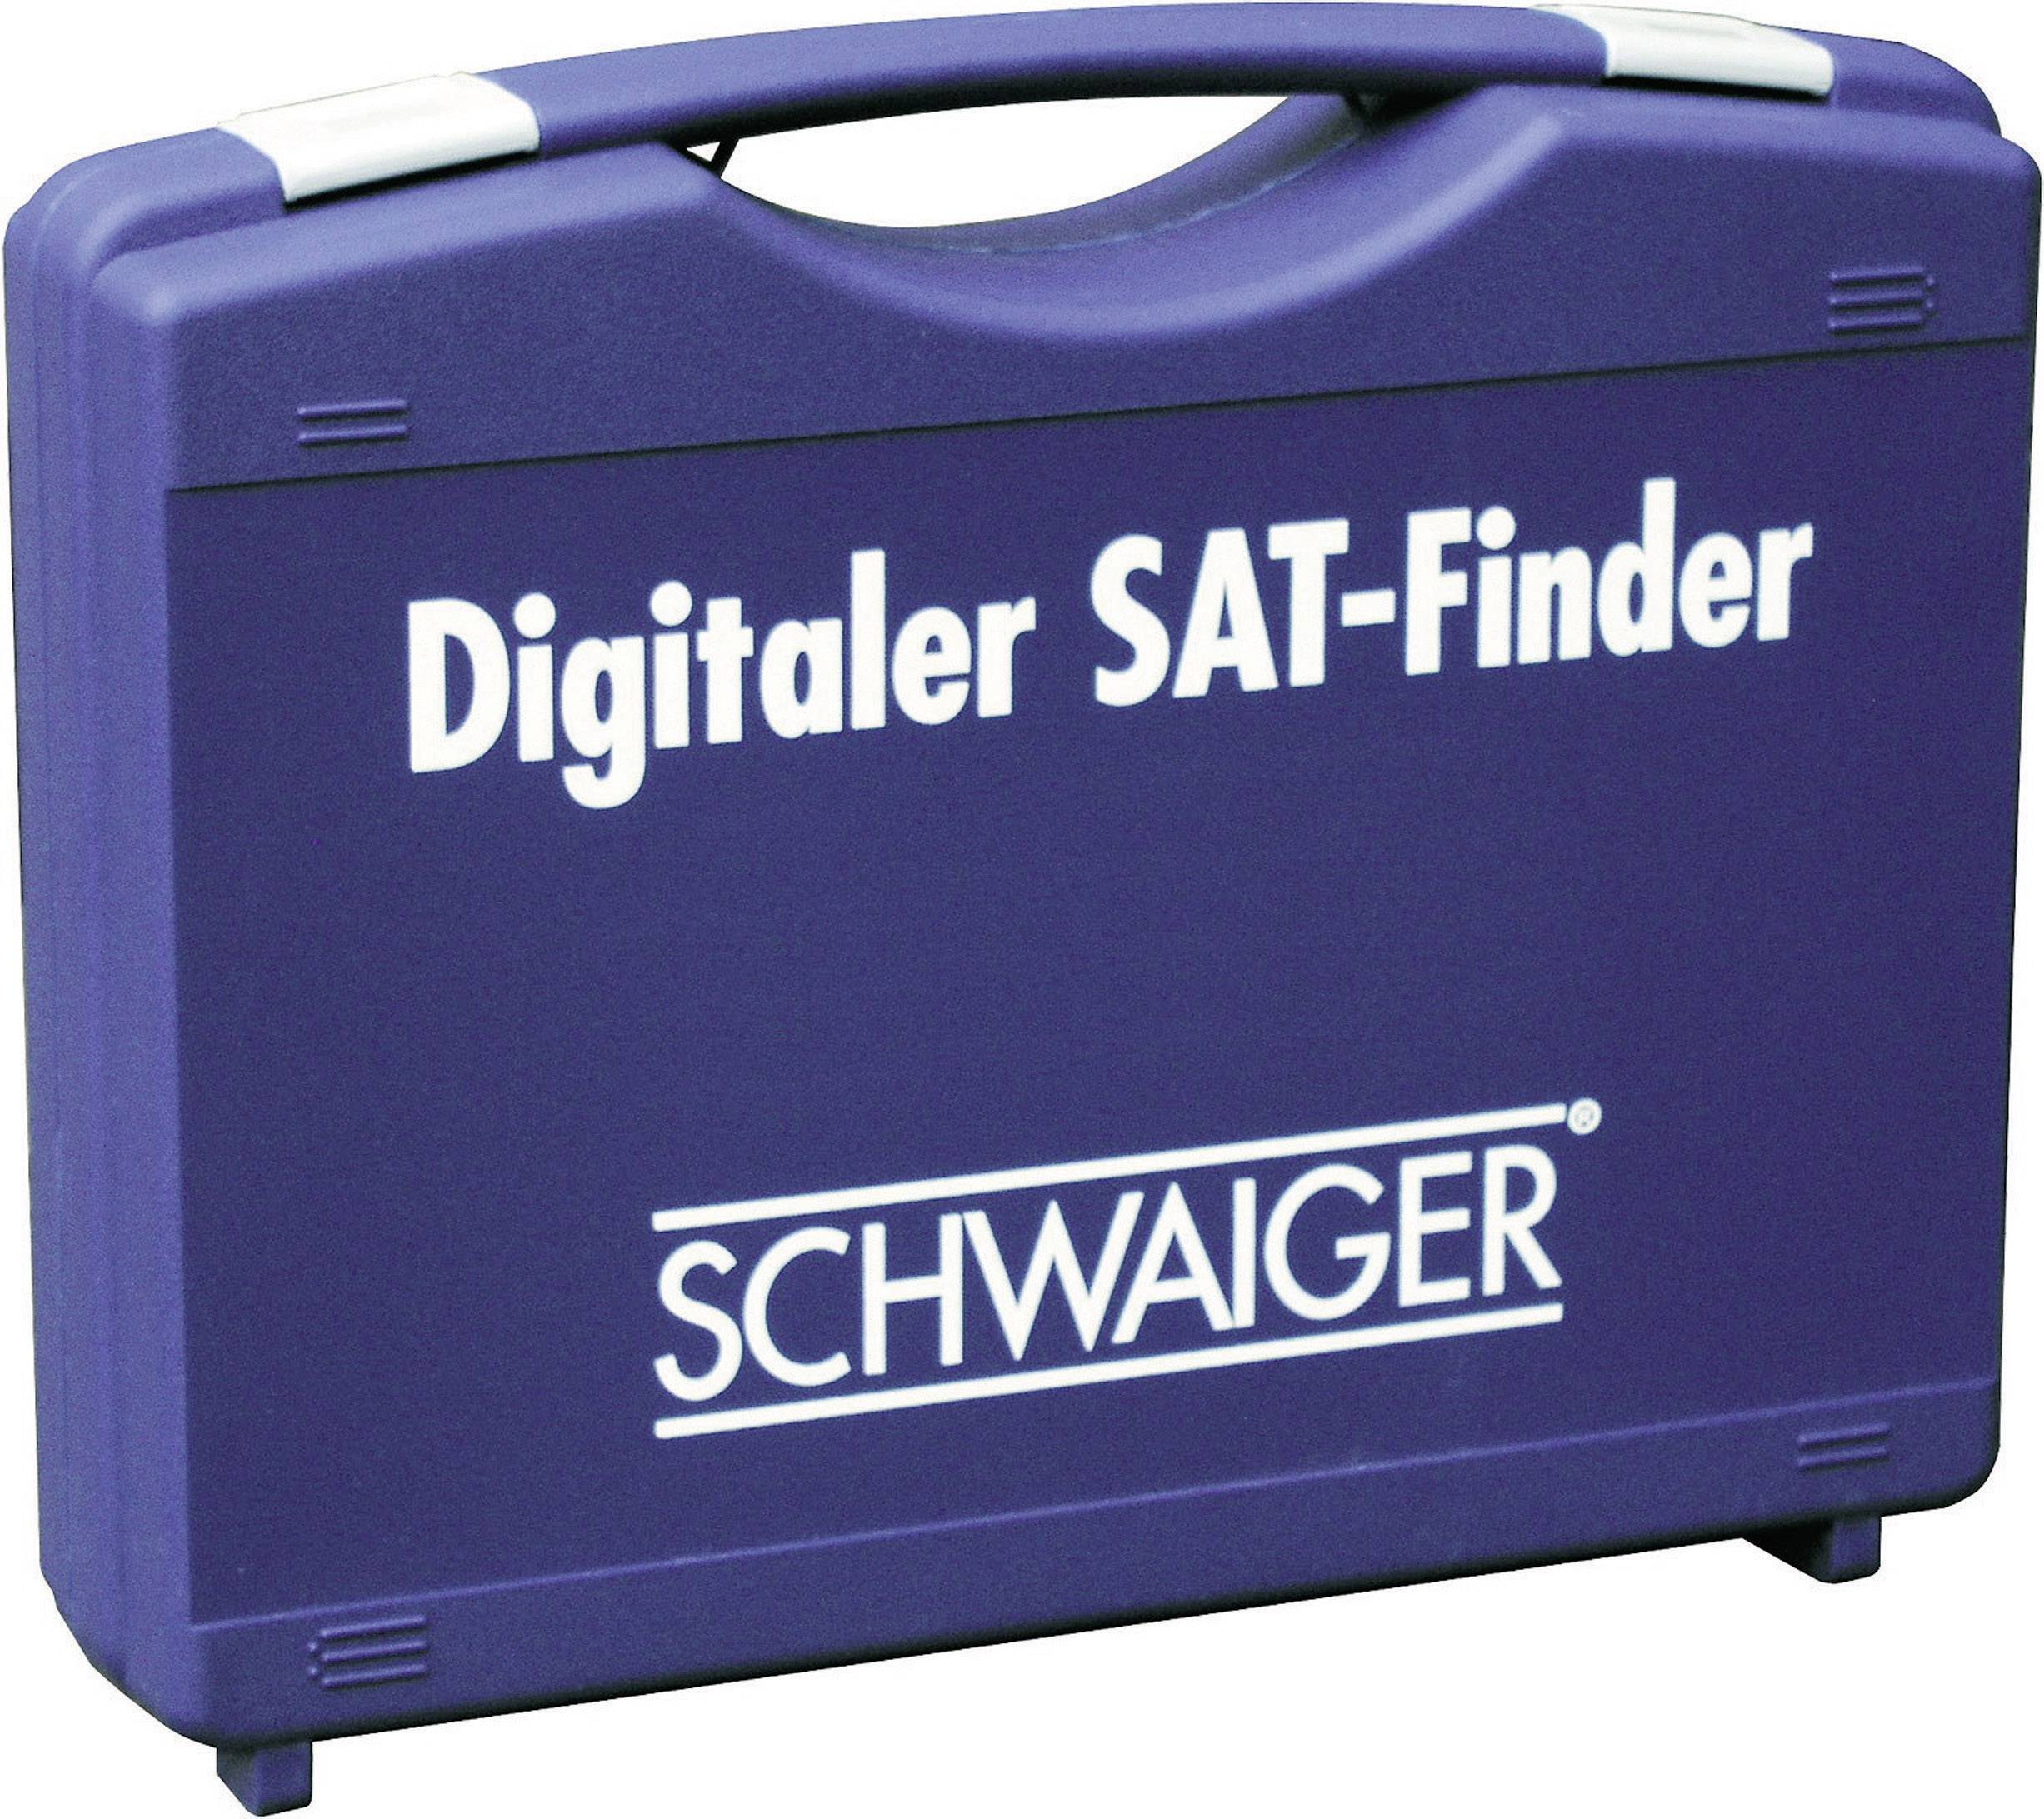 Schwaiger Satfinder HD Pointeur satellite - Conrad Electronic France